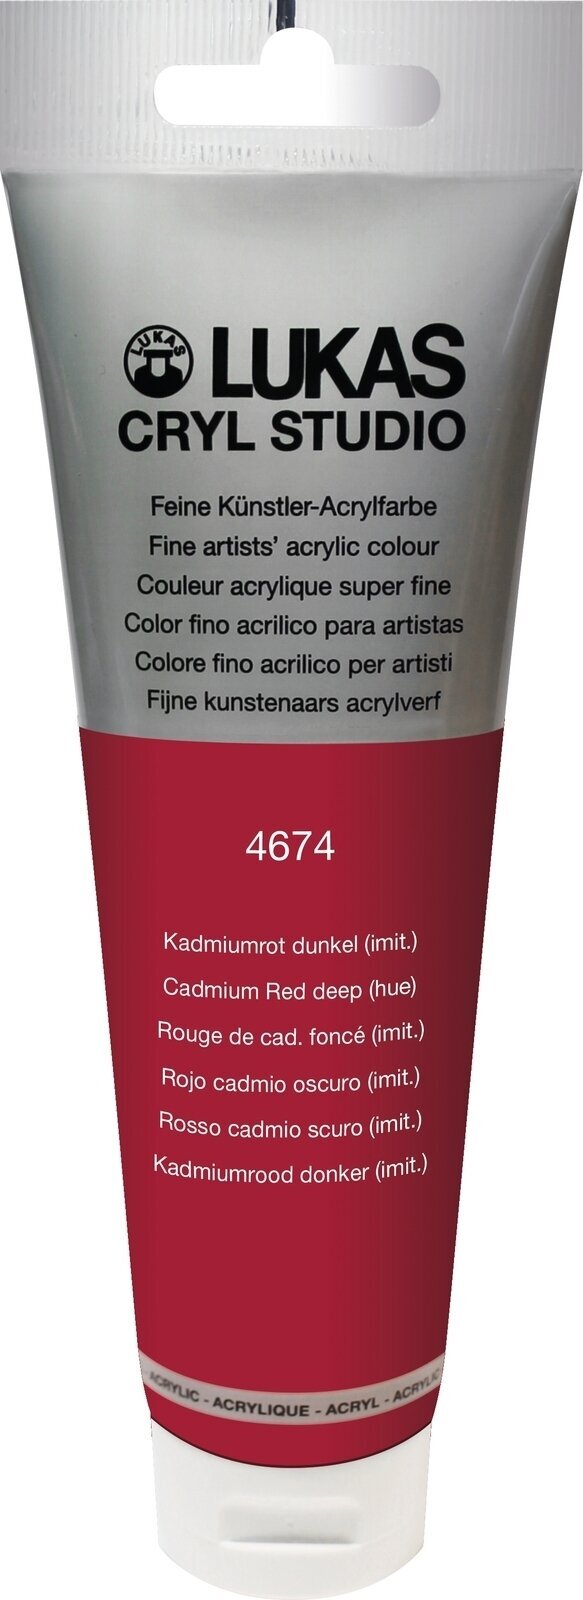 Akrylová farba Lukas Cryl Studio Acrylic Paint Plastic Tube Akrylová farba Cadmium Red Deep Hue 125 ml 1 ks